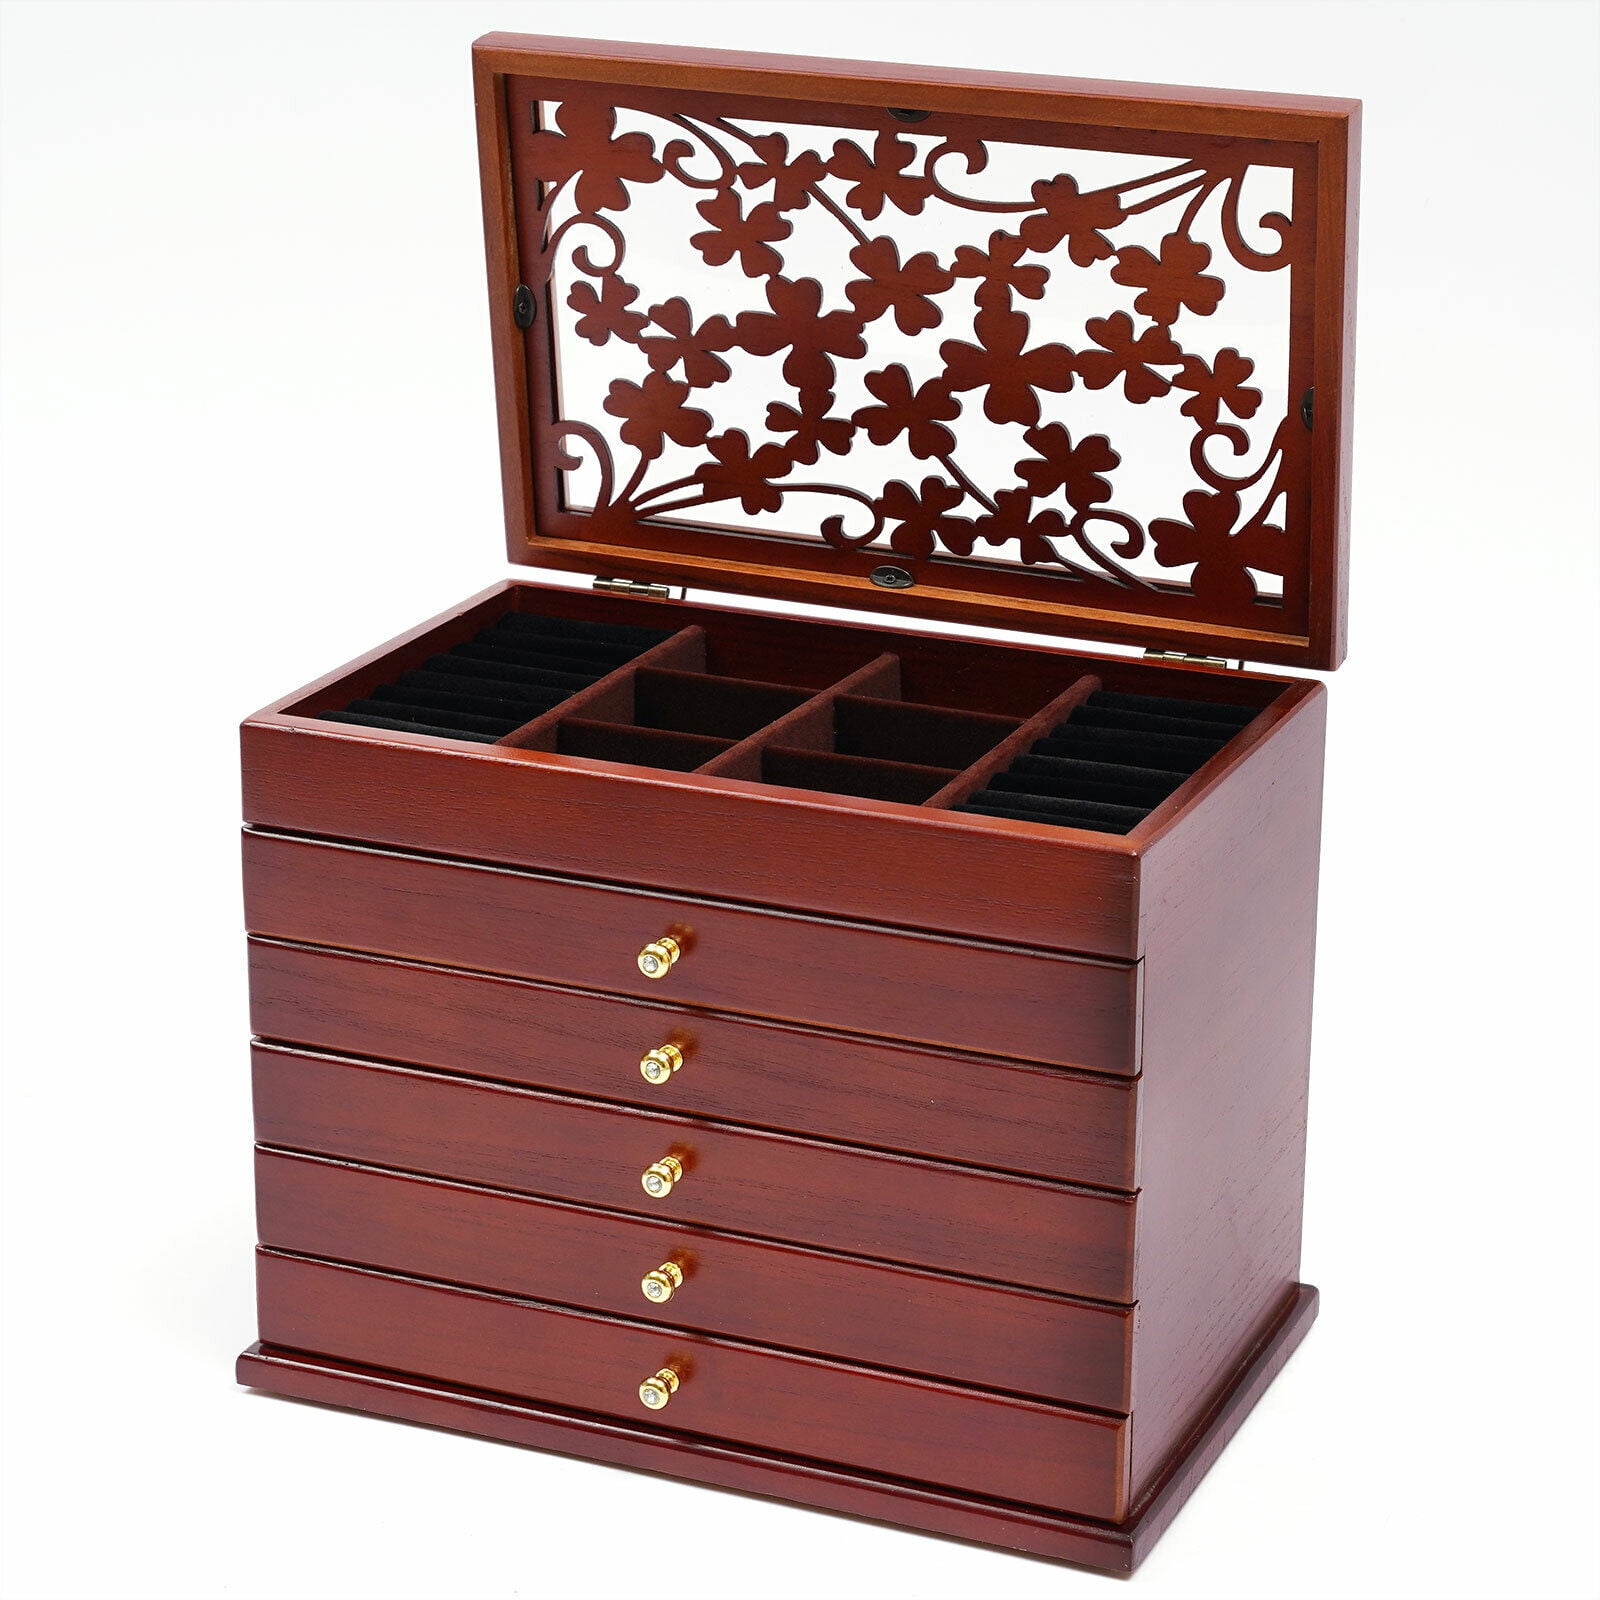 12 grid retro solid wood jewelry box storage box wooden jewelry display box  with glass cover wooden box organizer sale 26*19*6cm - AliExpress